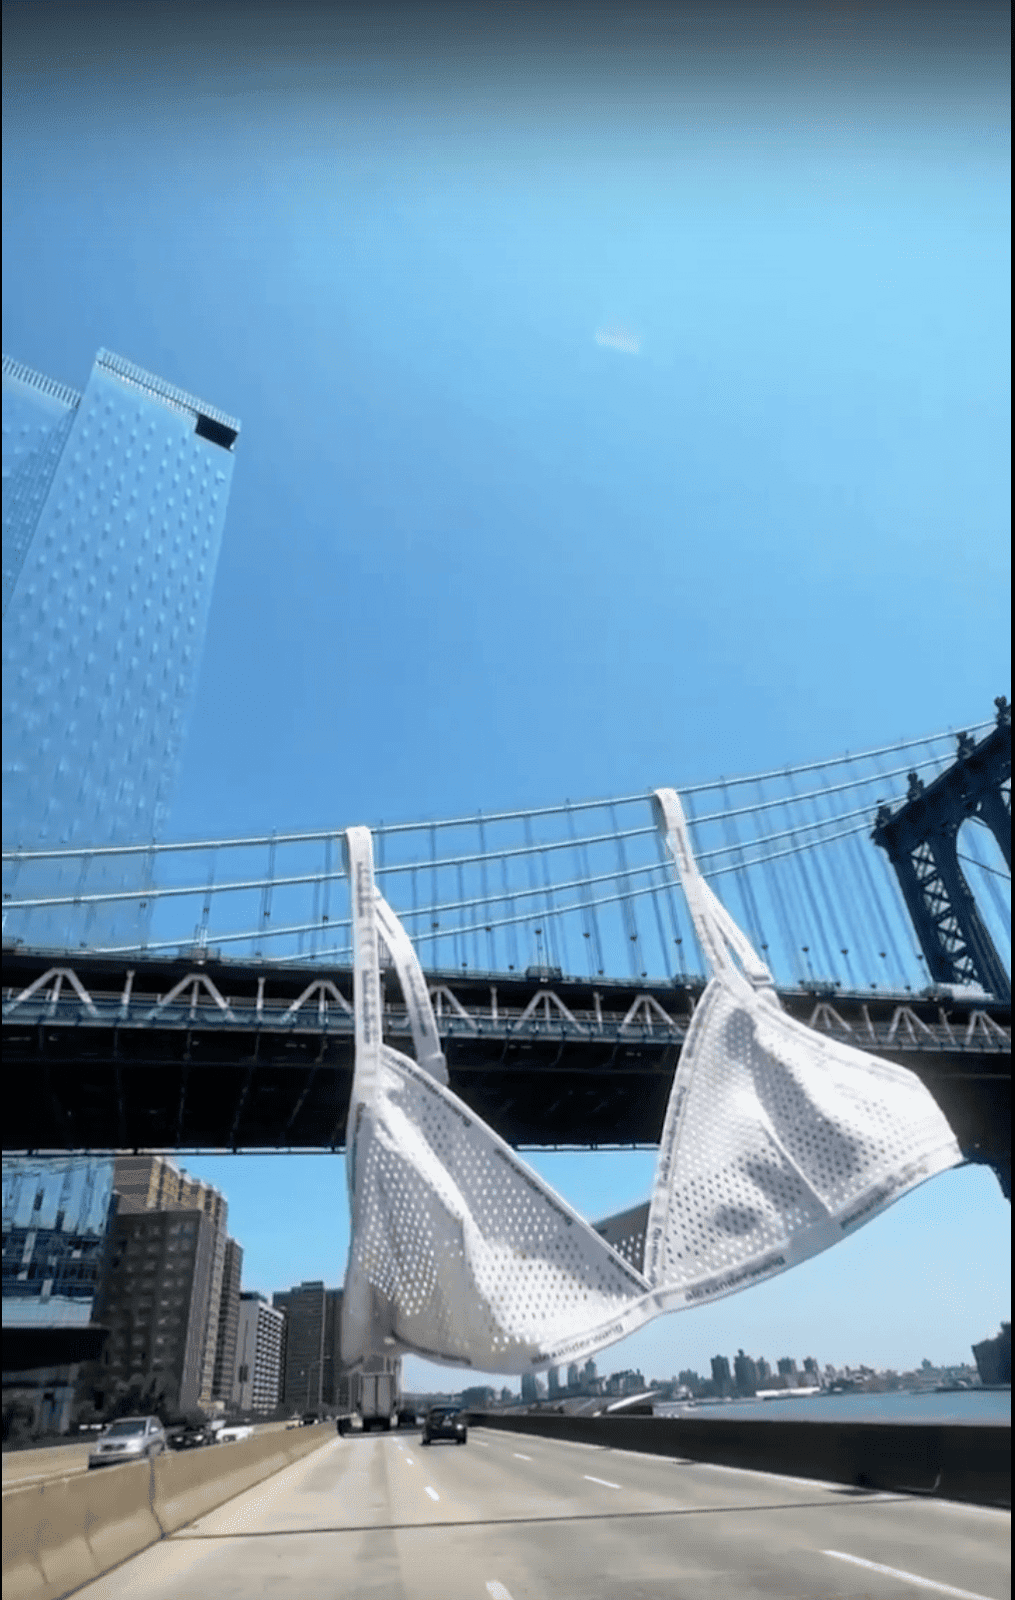 A giant Alexander Wang Underwear bra above the bridge in New York